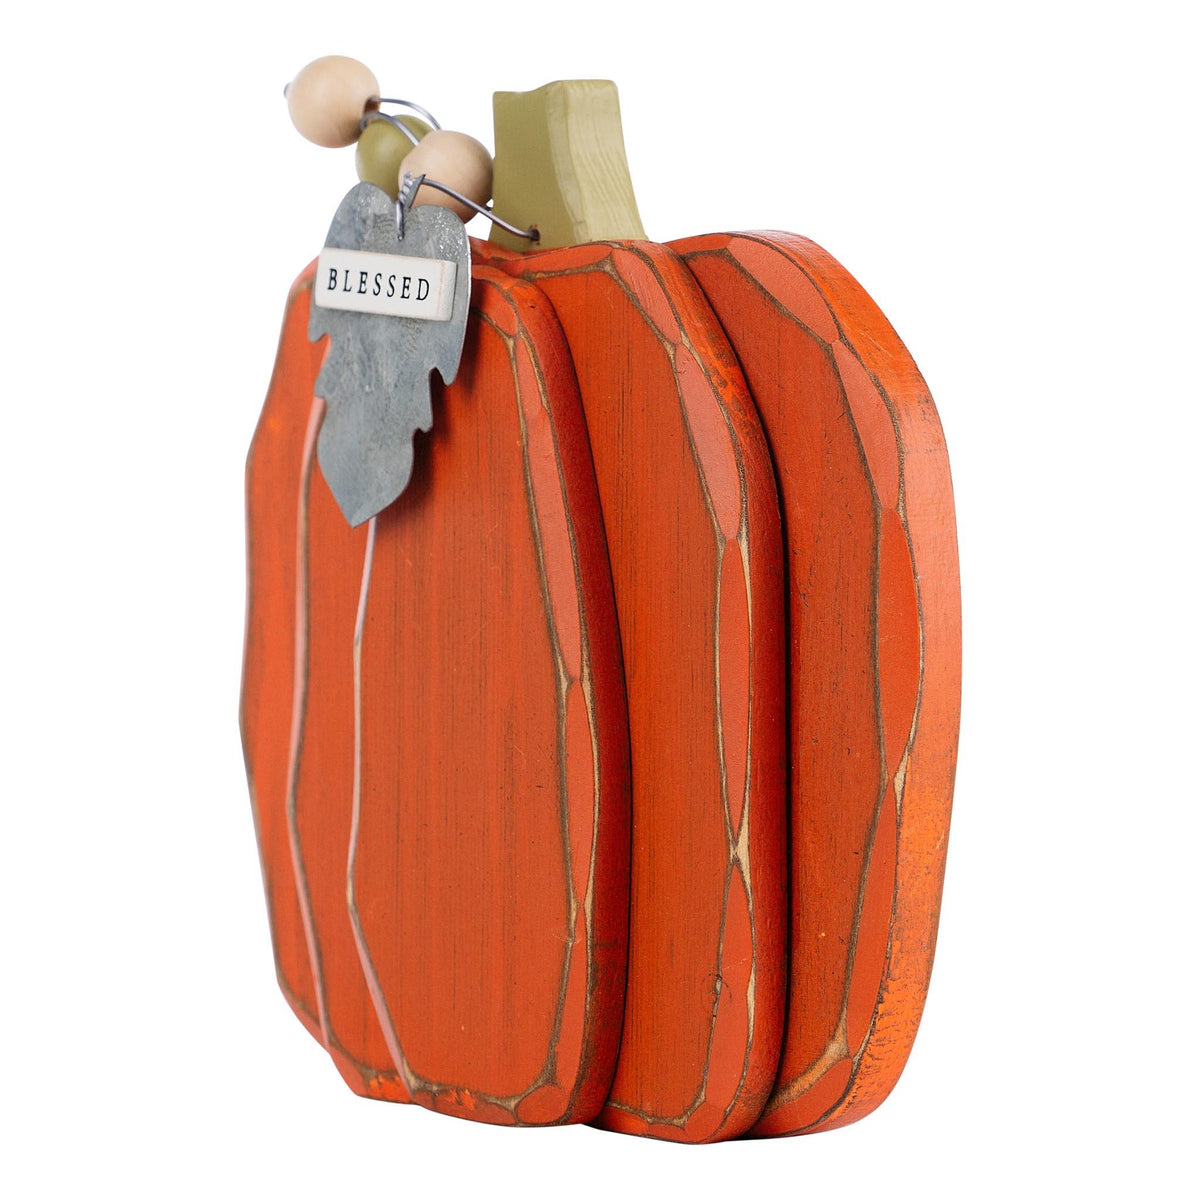 Blessed Wooden Pumpkin - GLORY HAUS 